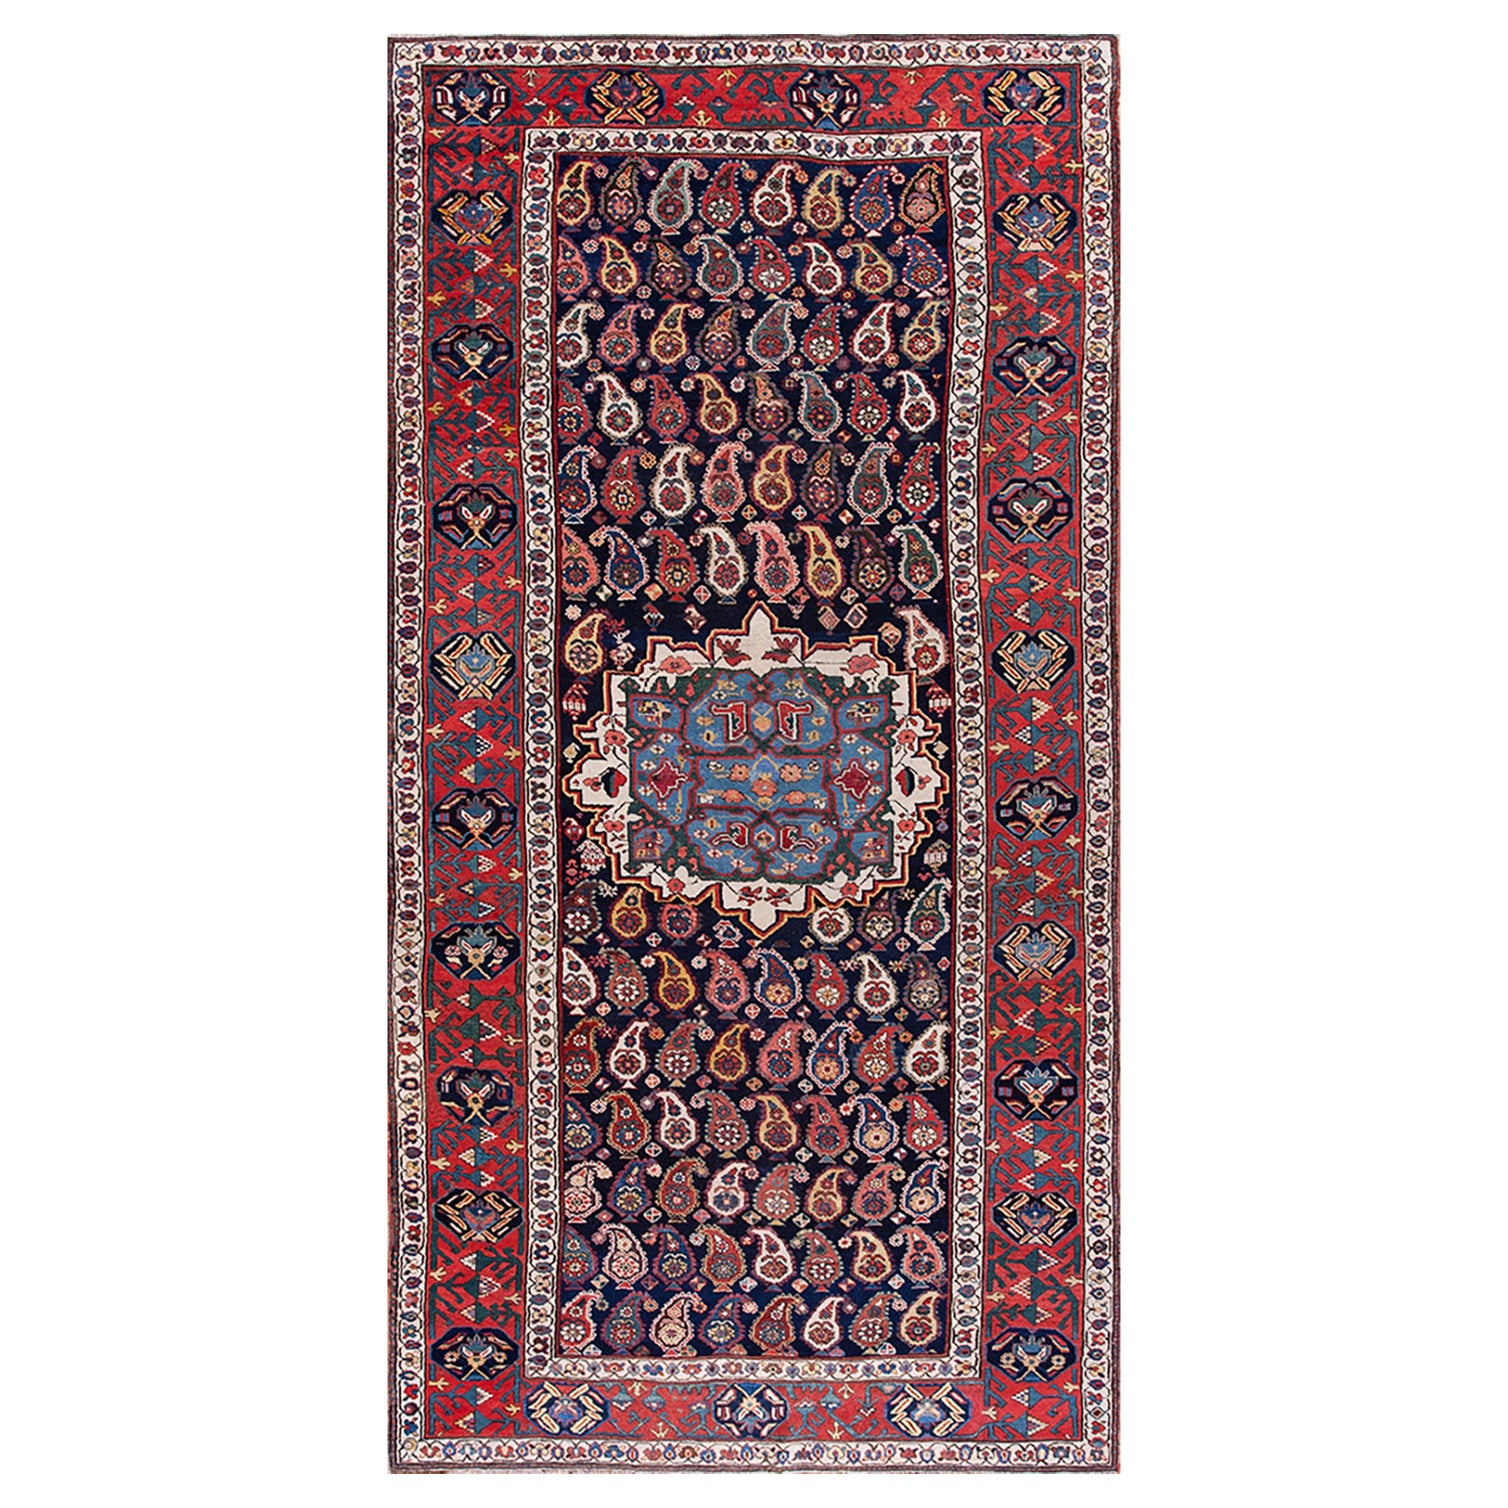 Antique Early 19th Century Caucasian Karabagh Carpet